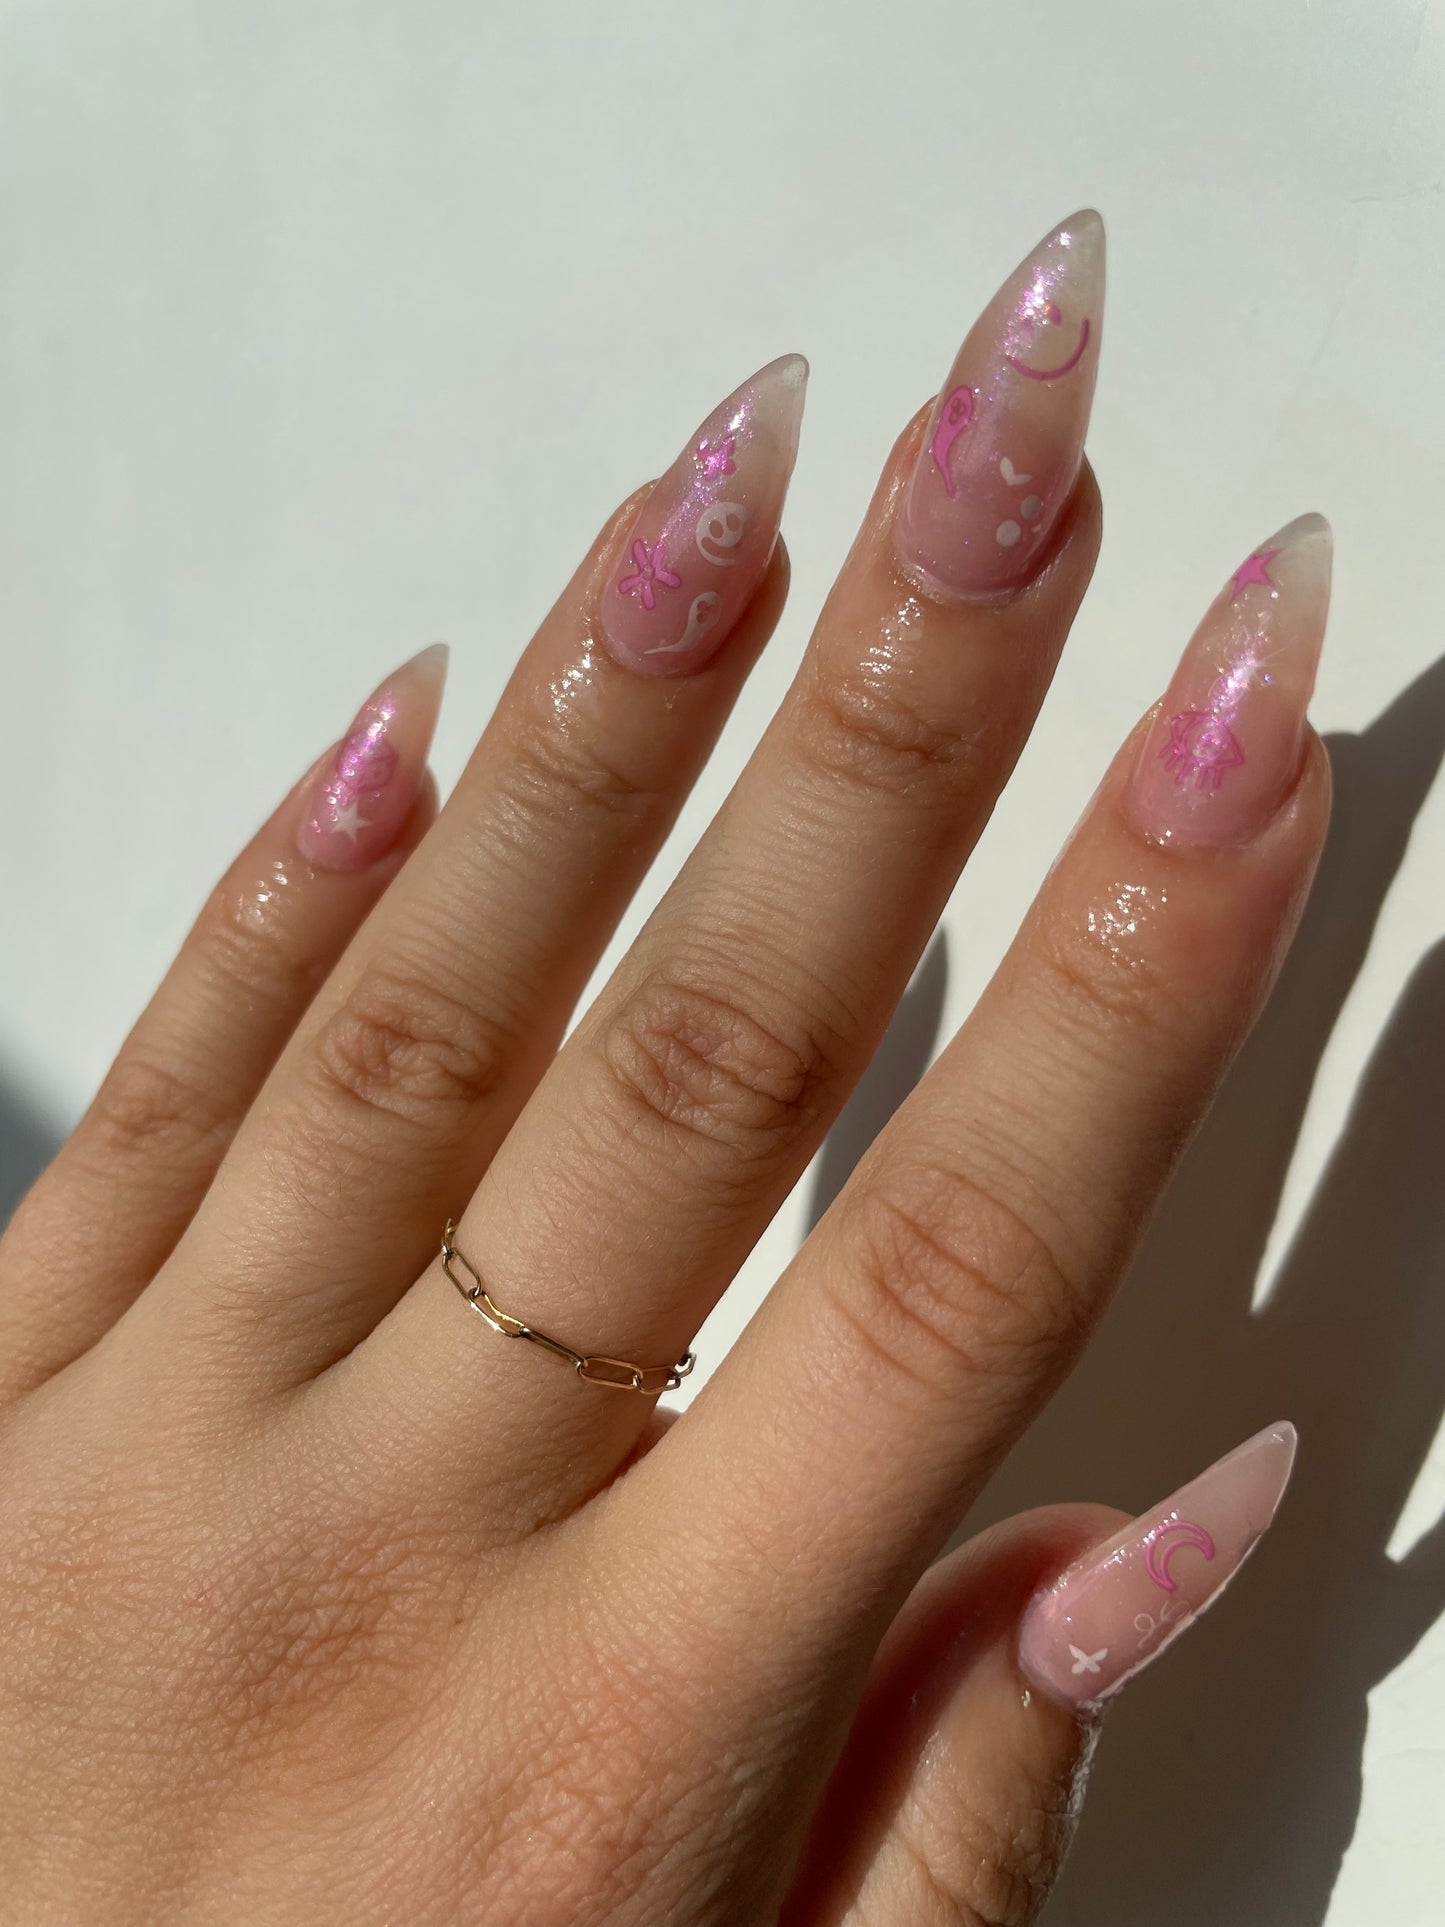 Glow nail art look in pink